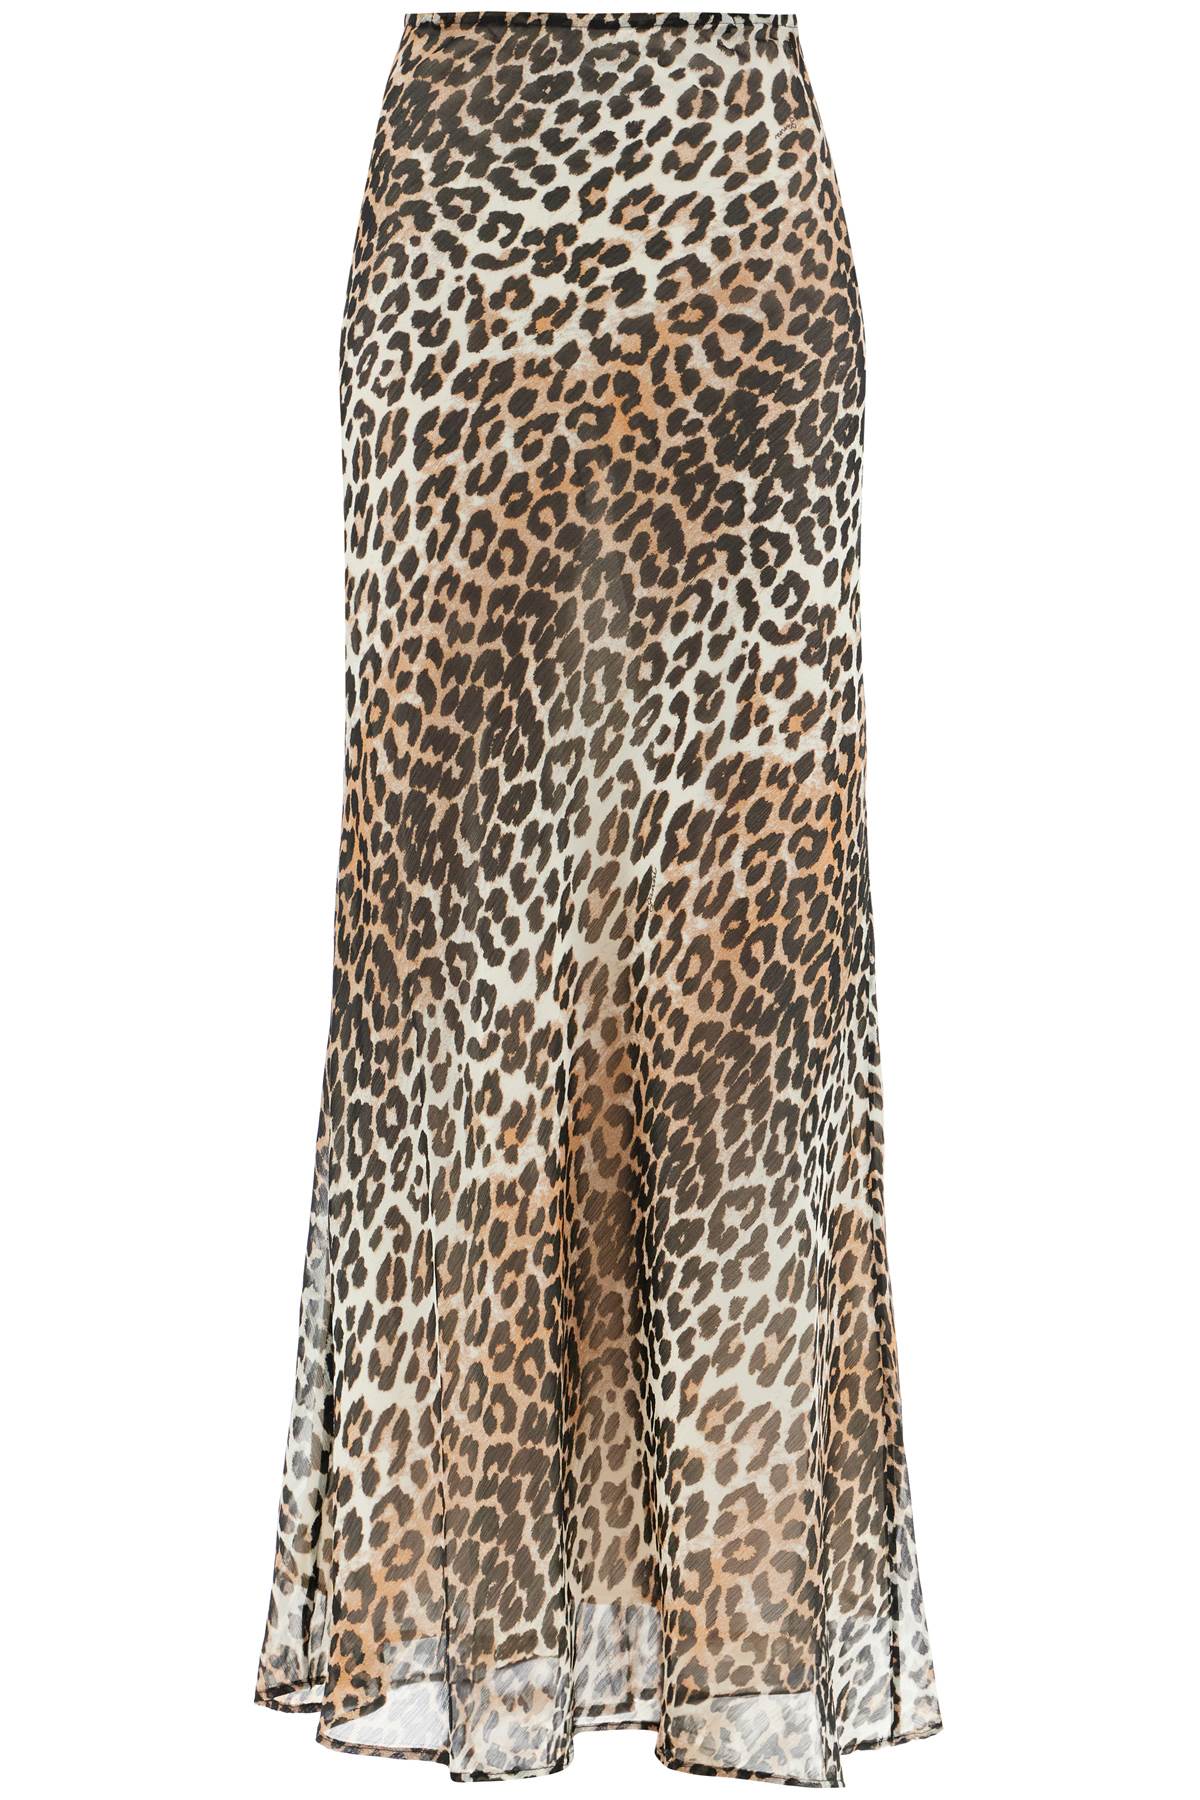 Long Chiffon Animal Print Maxi Skirt